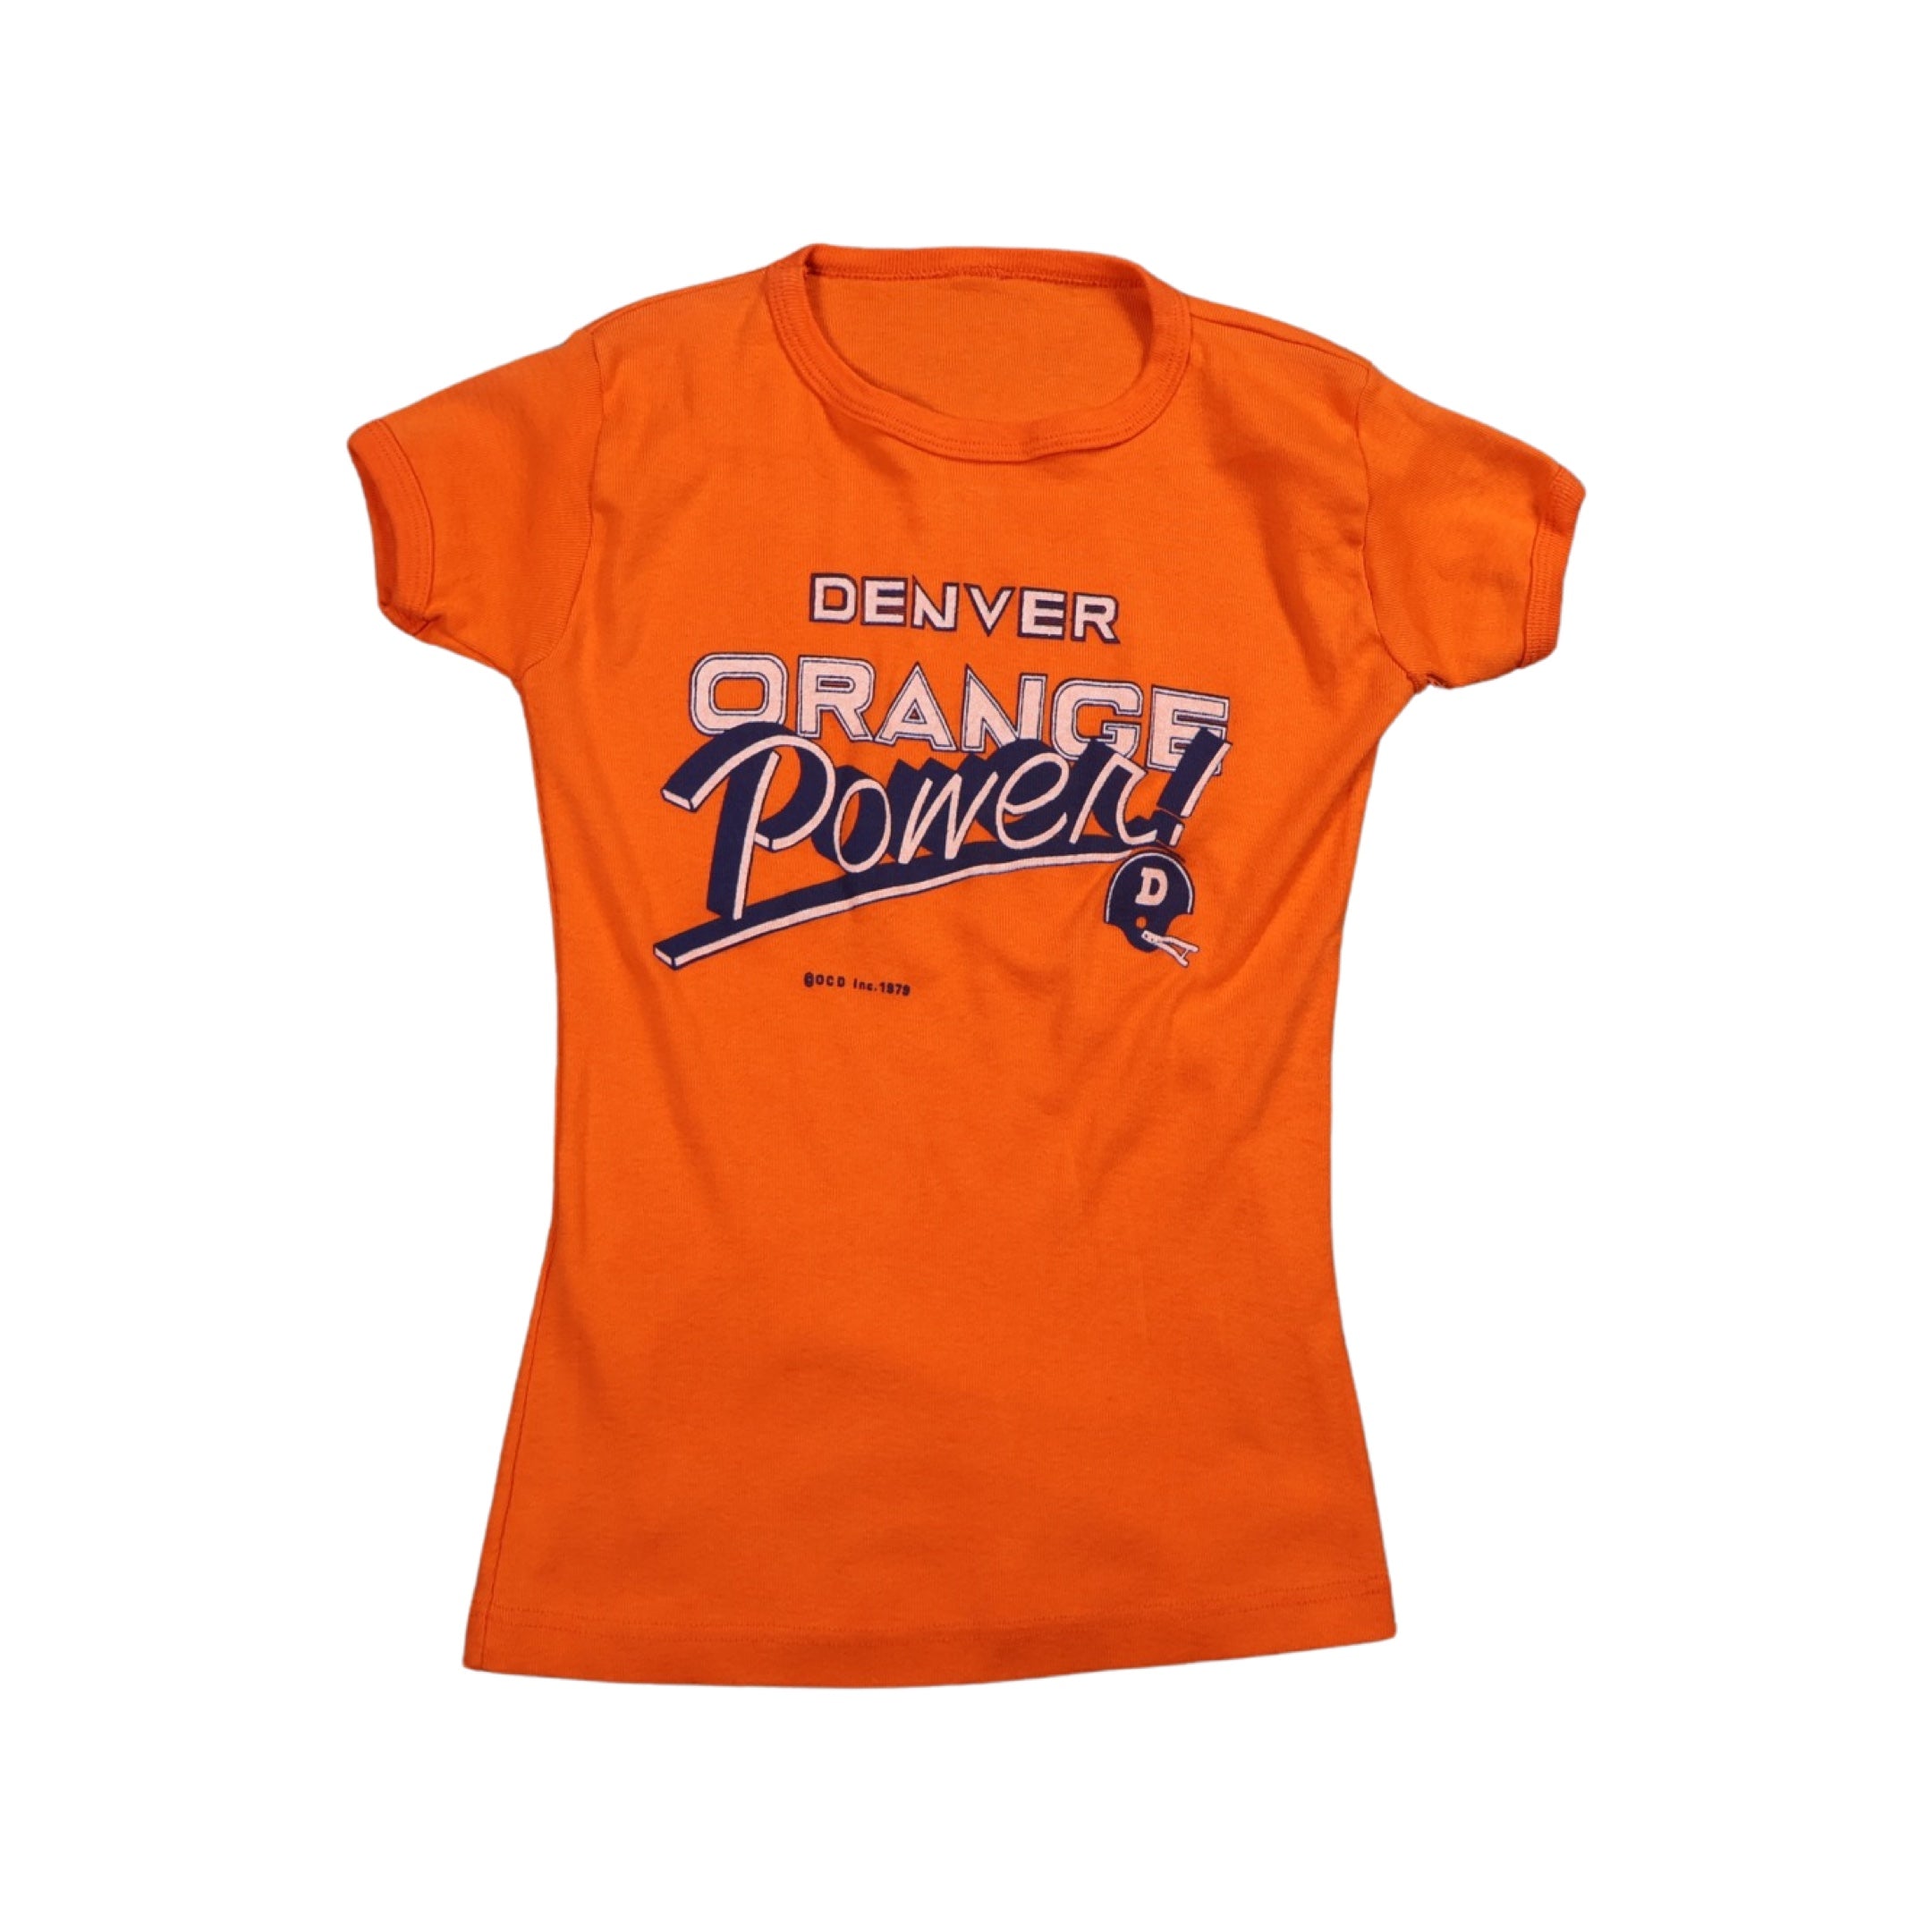 Denver Broncos Orange Power 1979 Women’s T-Shirt (XS)